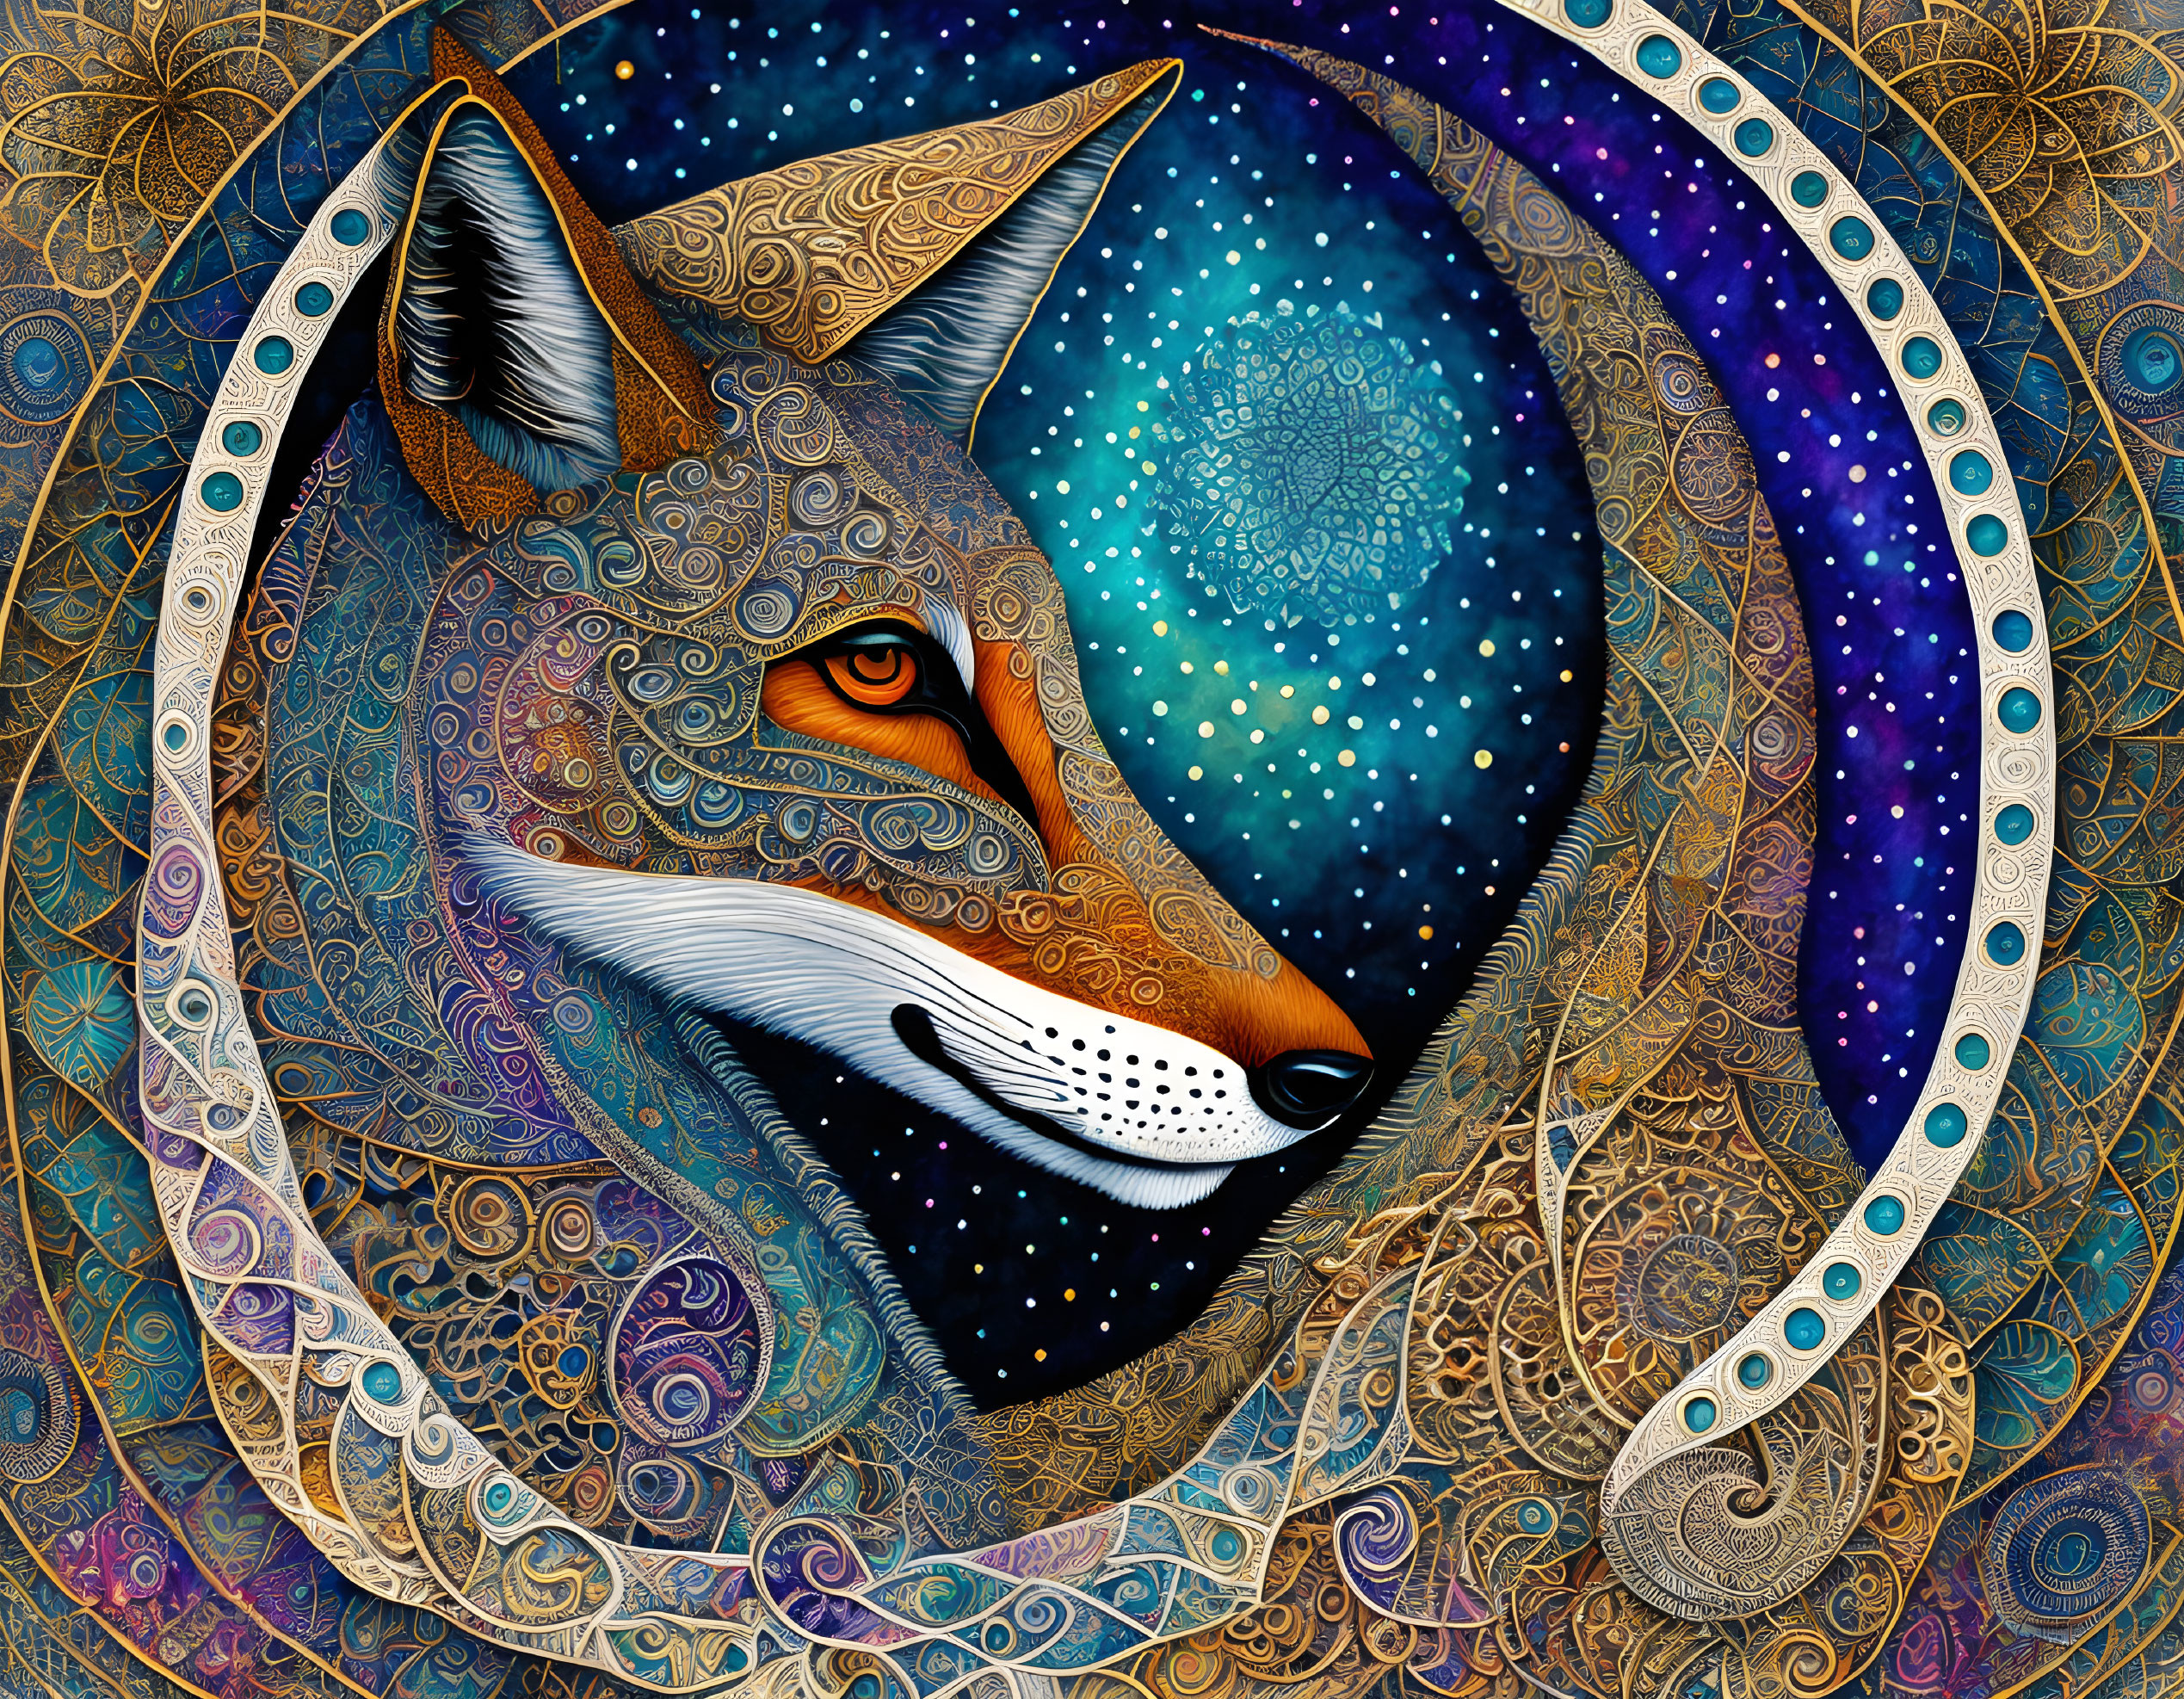 The Starry Fox